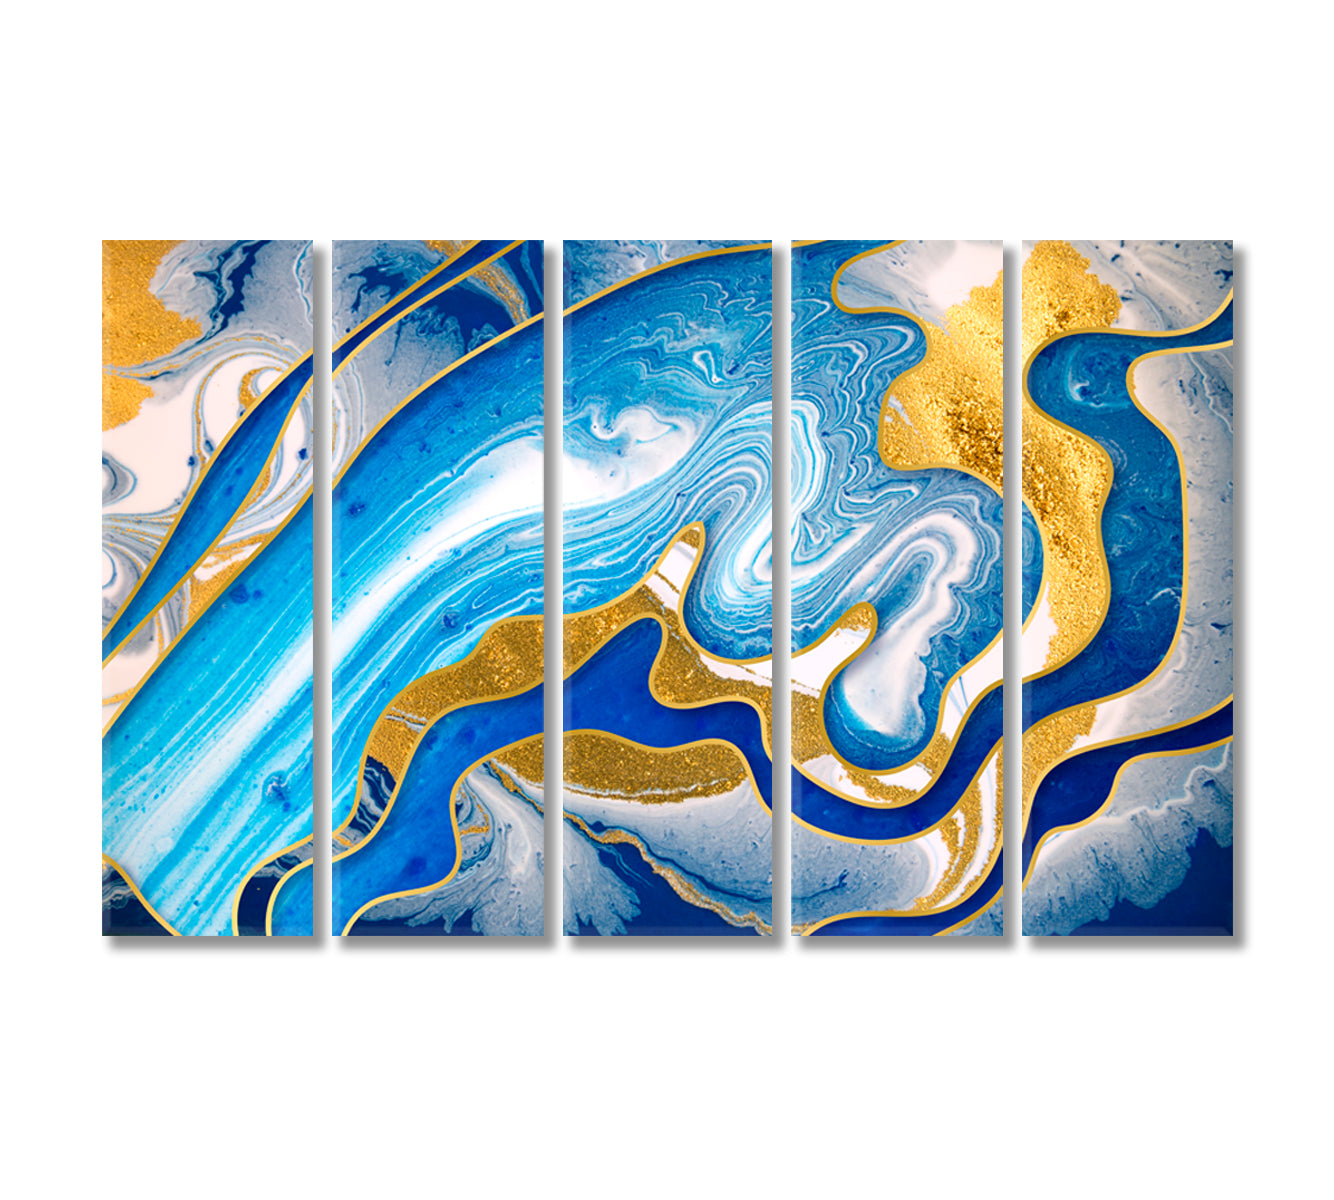 Abstract Modern Blue Yellow Waves Swirls Canvas Print-Canvas Print-CetArt-5 Panels-36x24 inches-CetArt